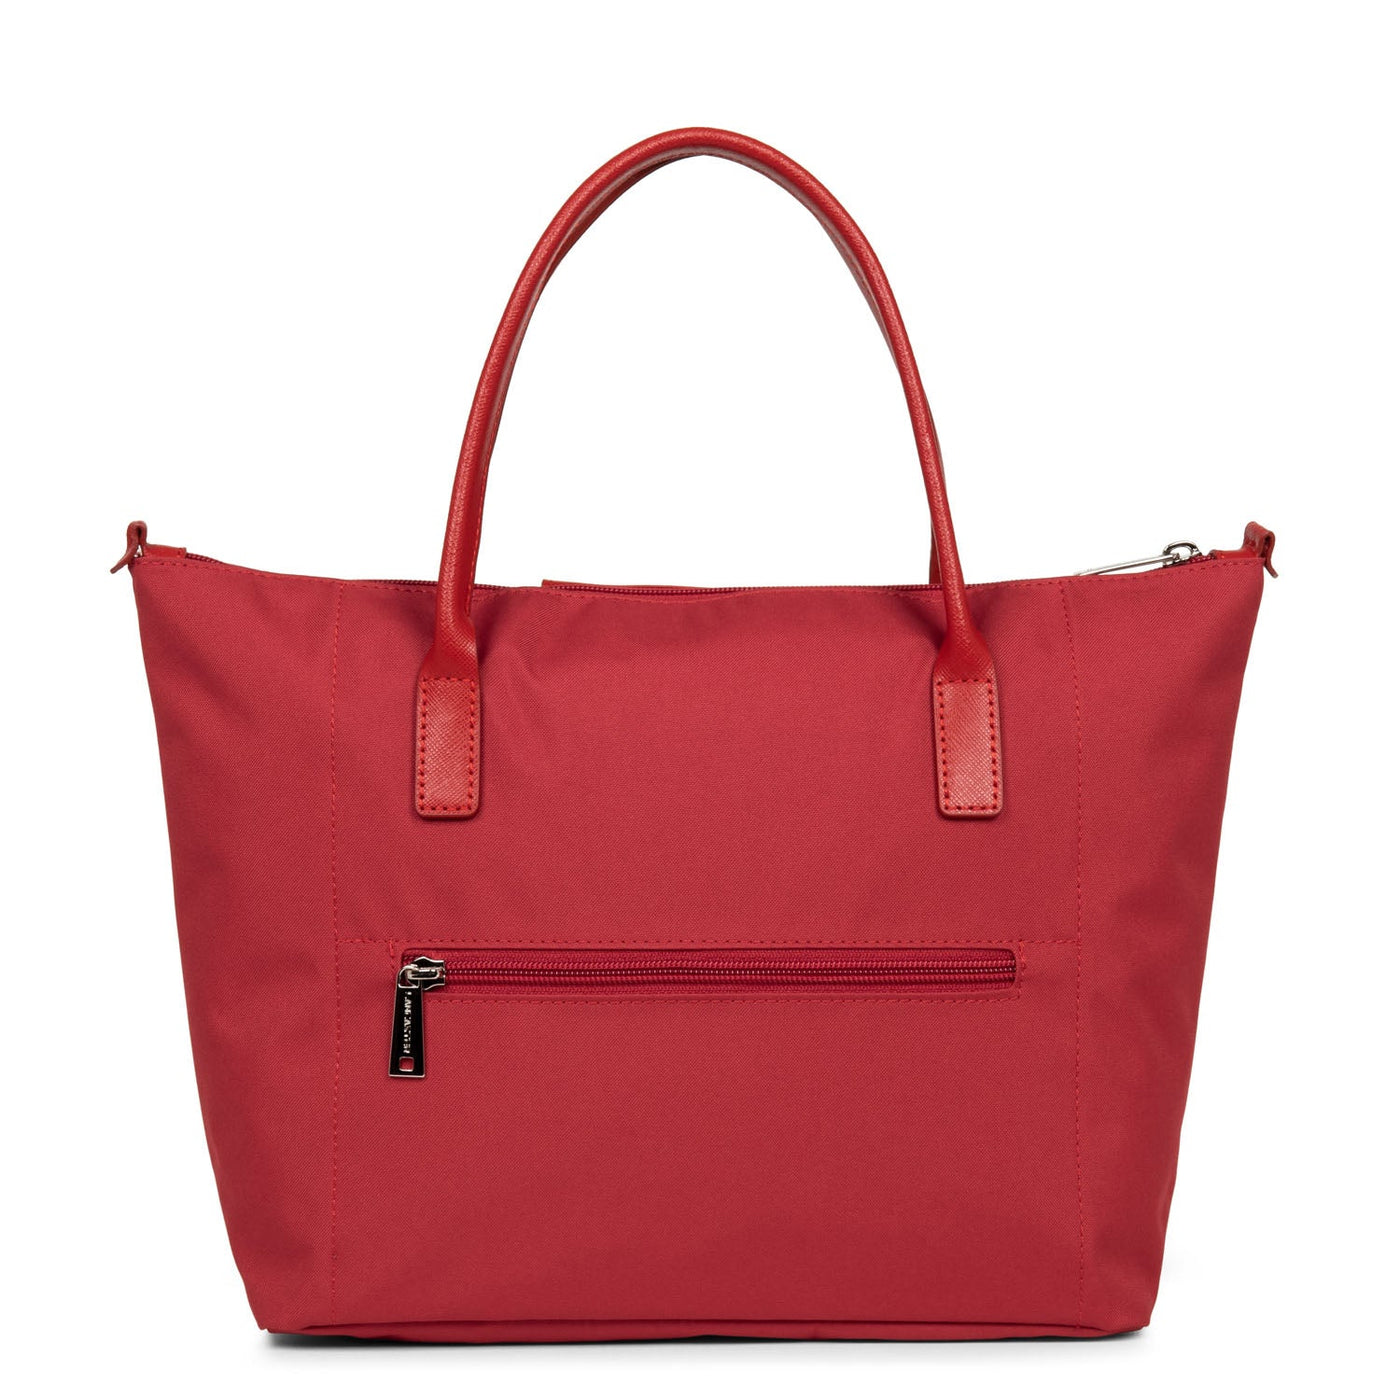 m tote bag - smart kba #couleur_rouge